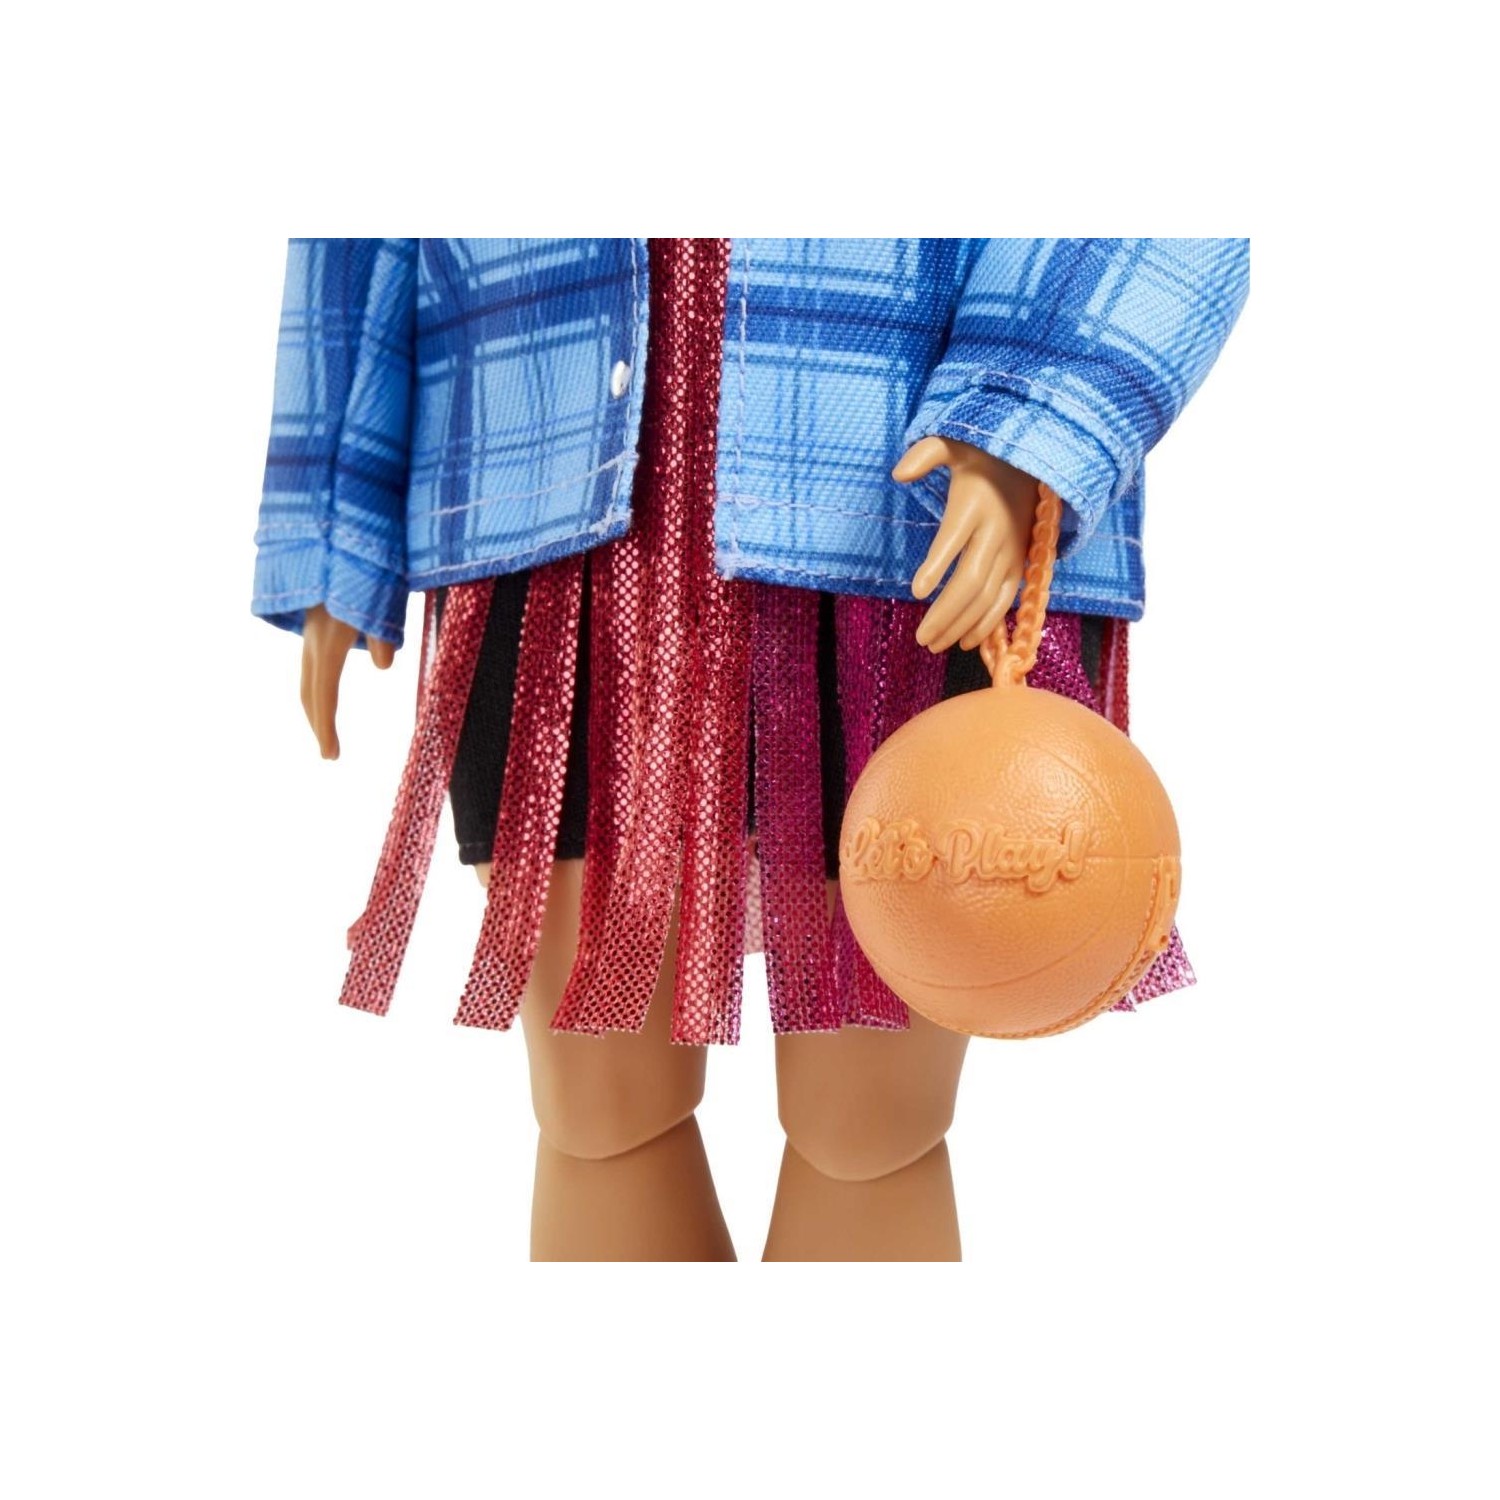 Кукла Barbie Extra Baby in Plaid Jacket, Corgi Dog HDJ46